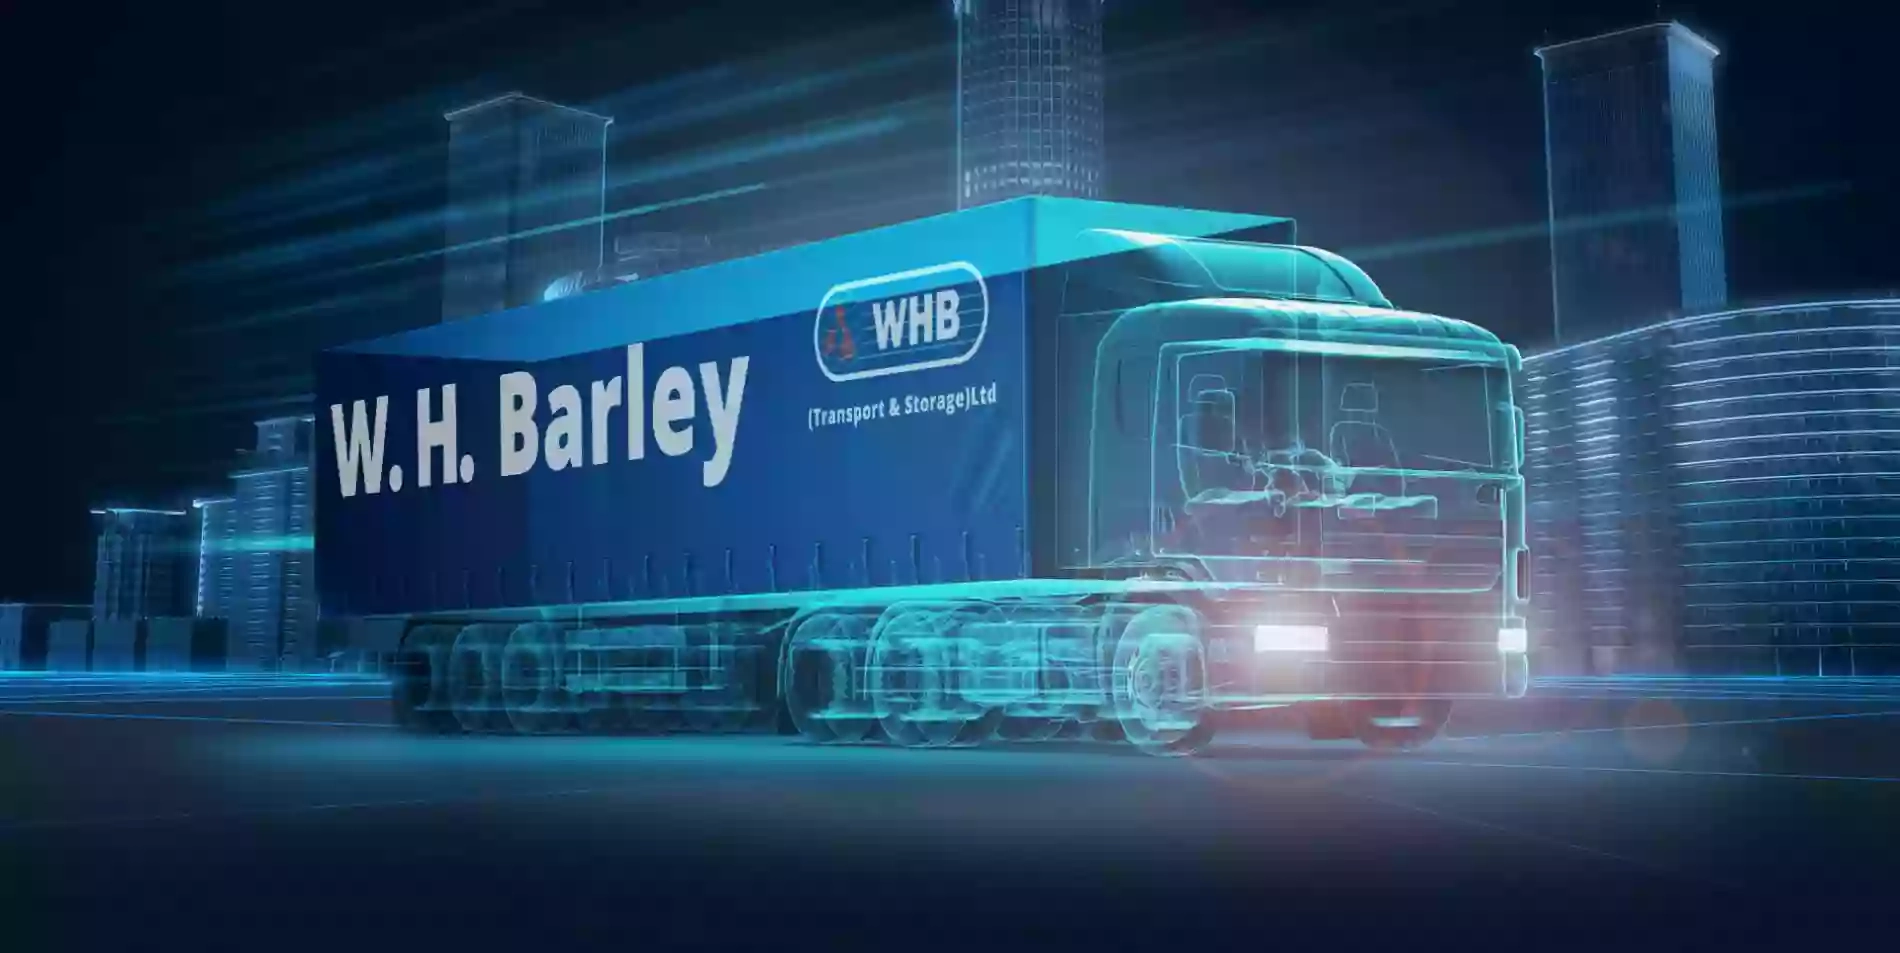 W H Barley (Transport & Storage) Ltd